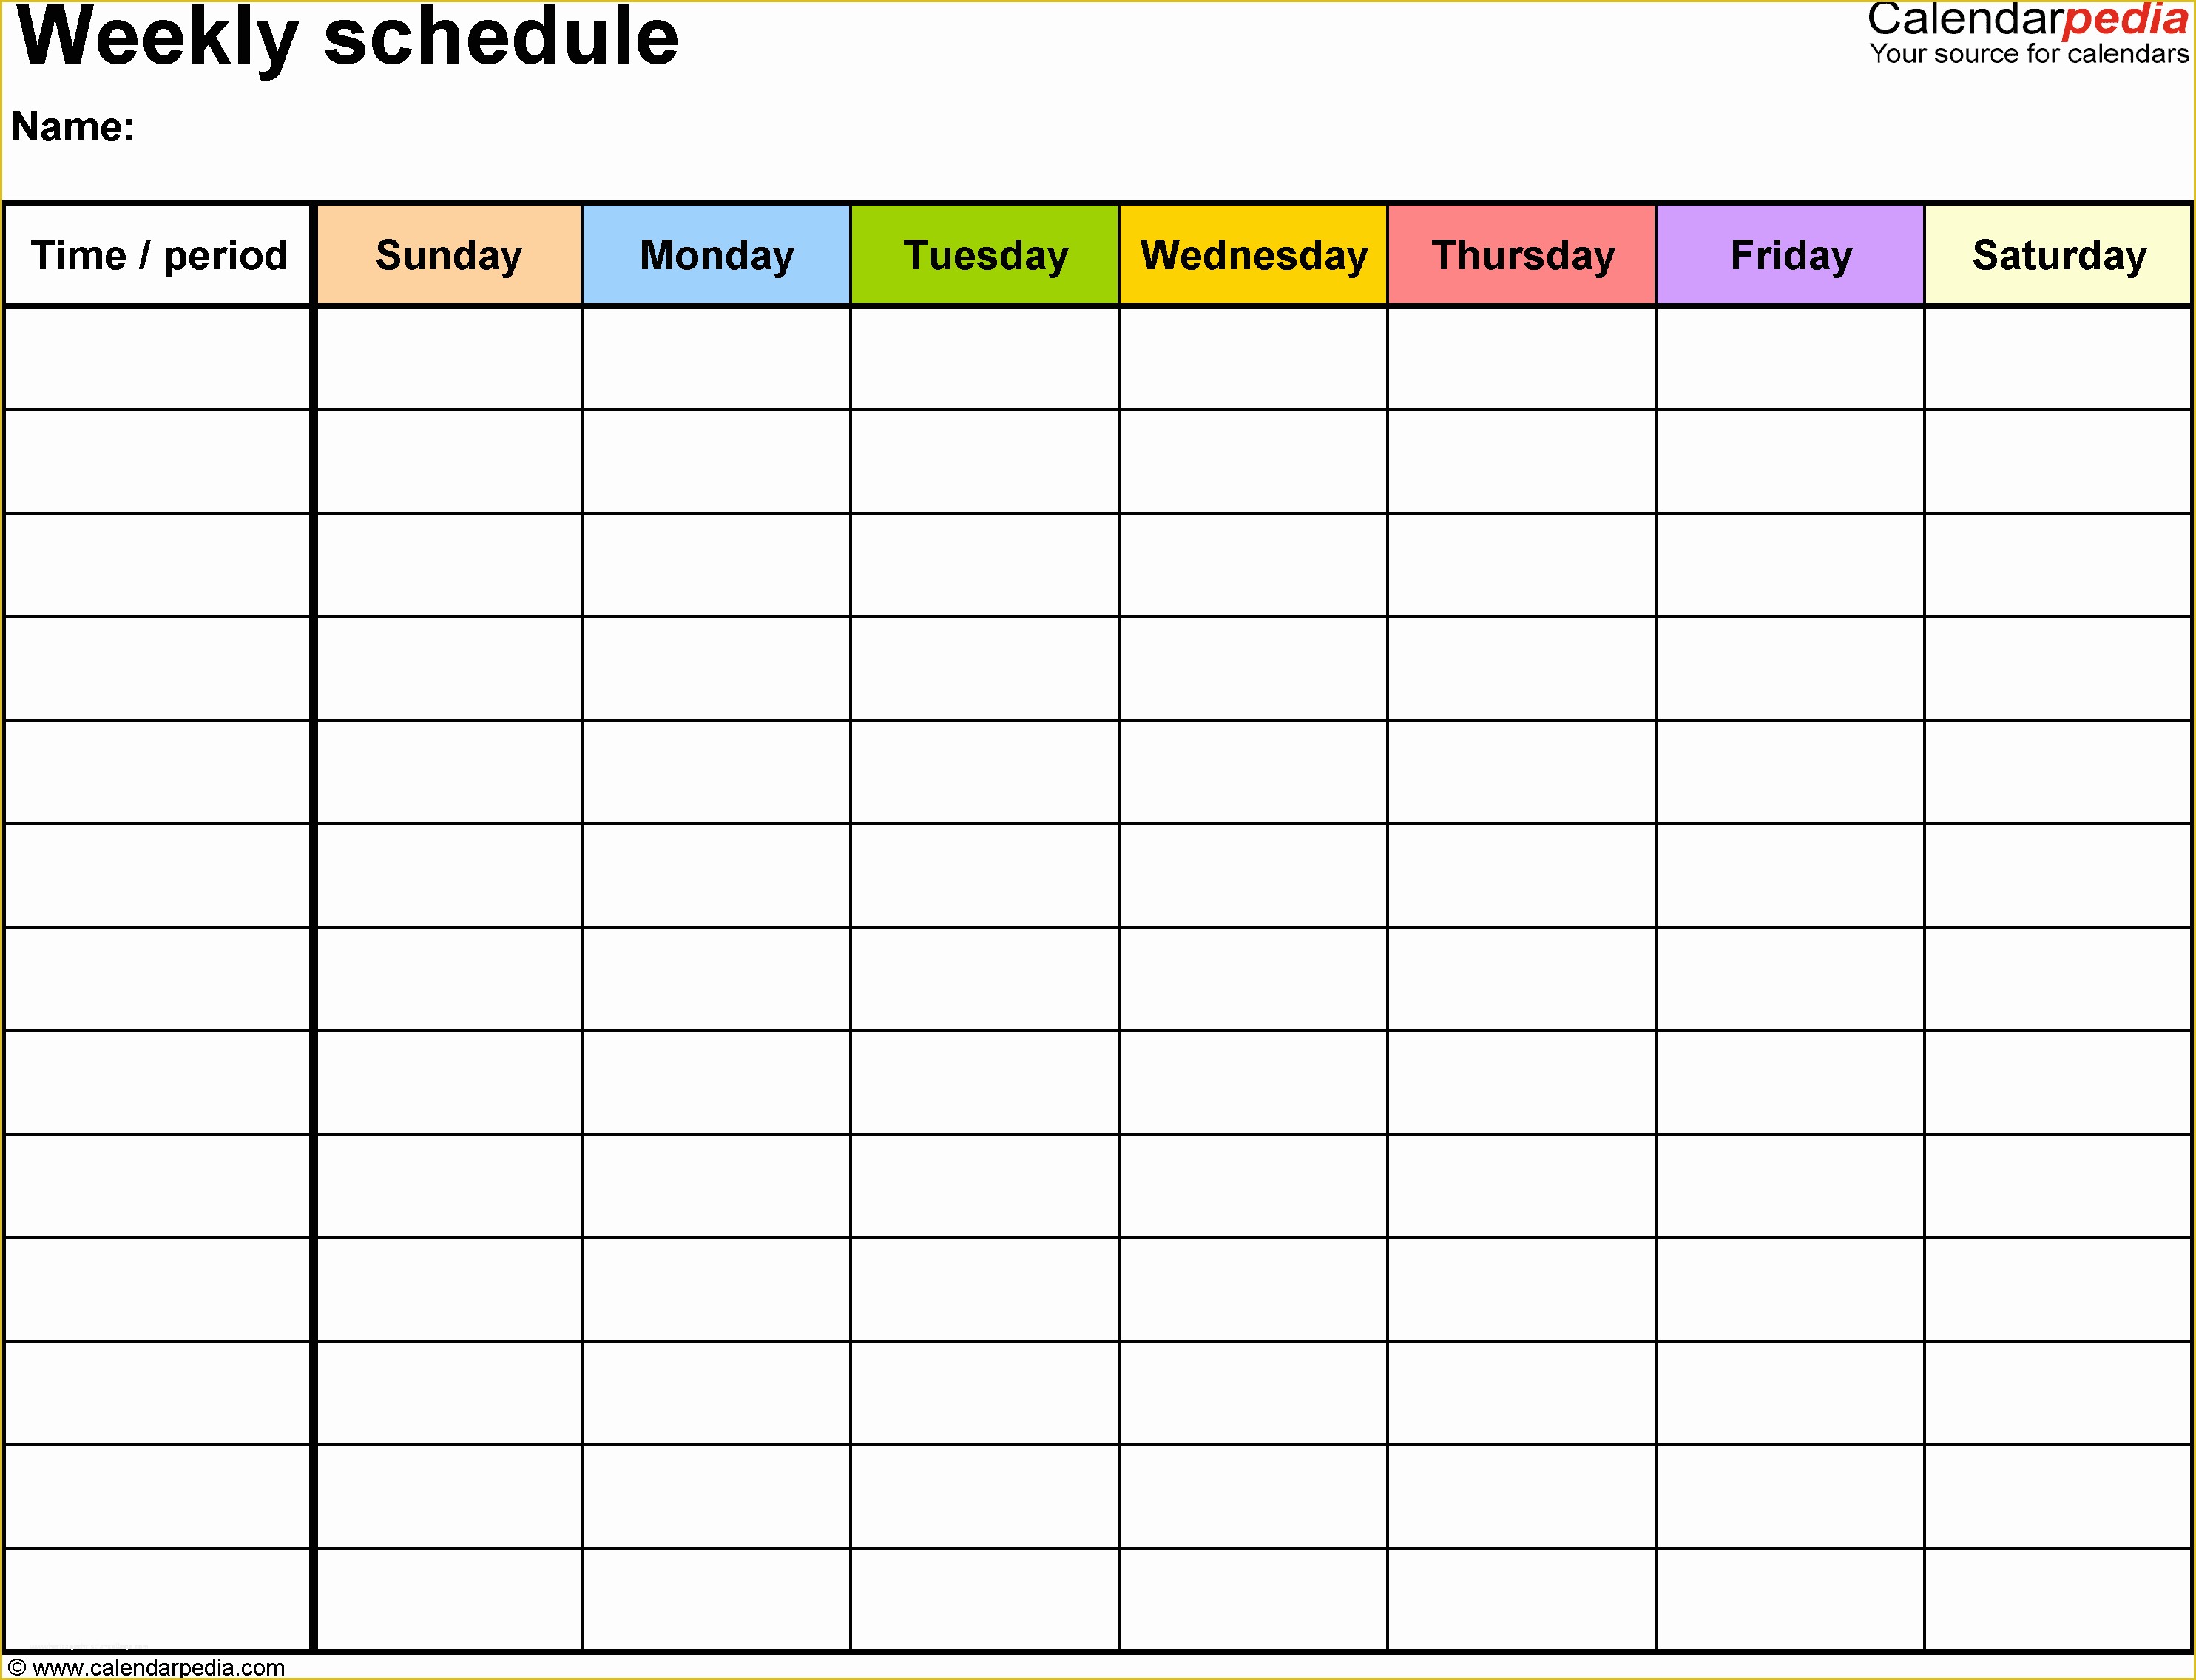 Free Weekly Planner Template Word Of Free Weekly Schedule Templates for Word 18 Templates